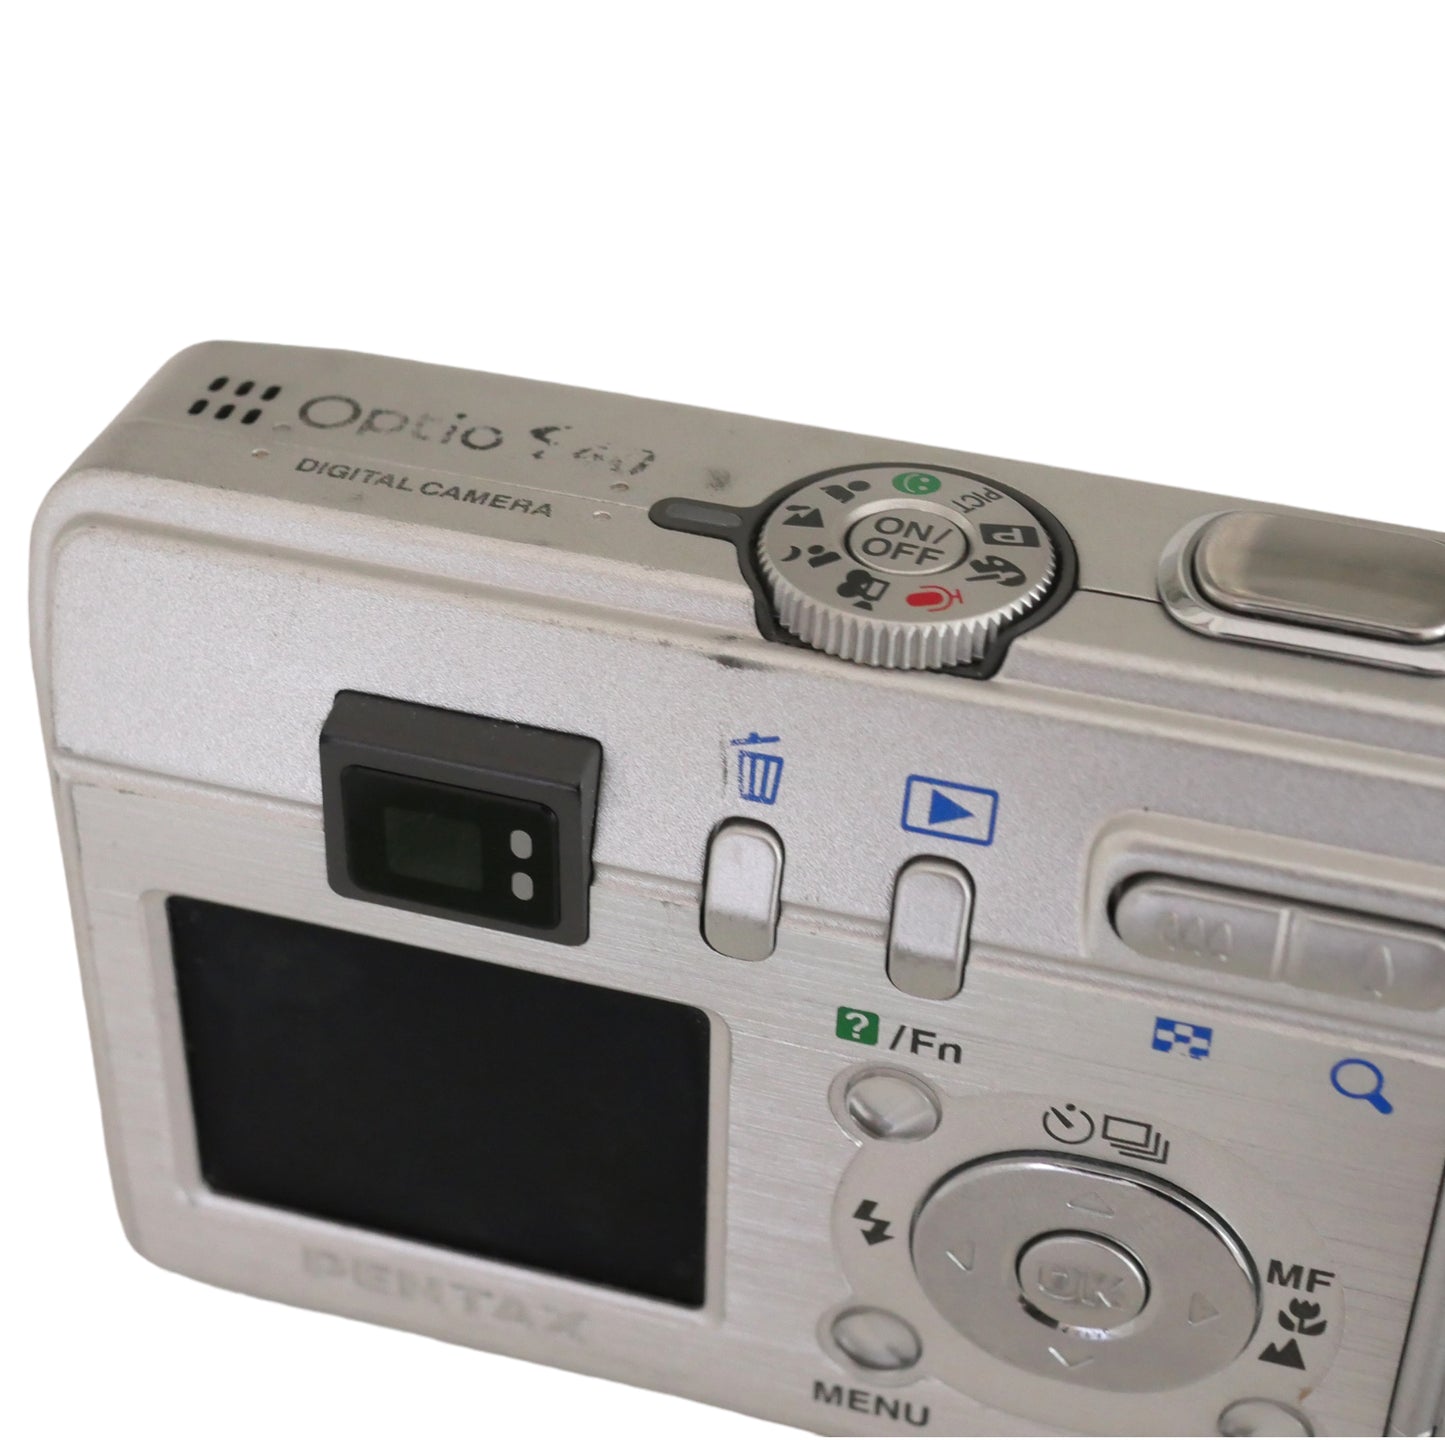 Pentax Optio S40 - 4.0 Megapixel Digital Camera